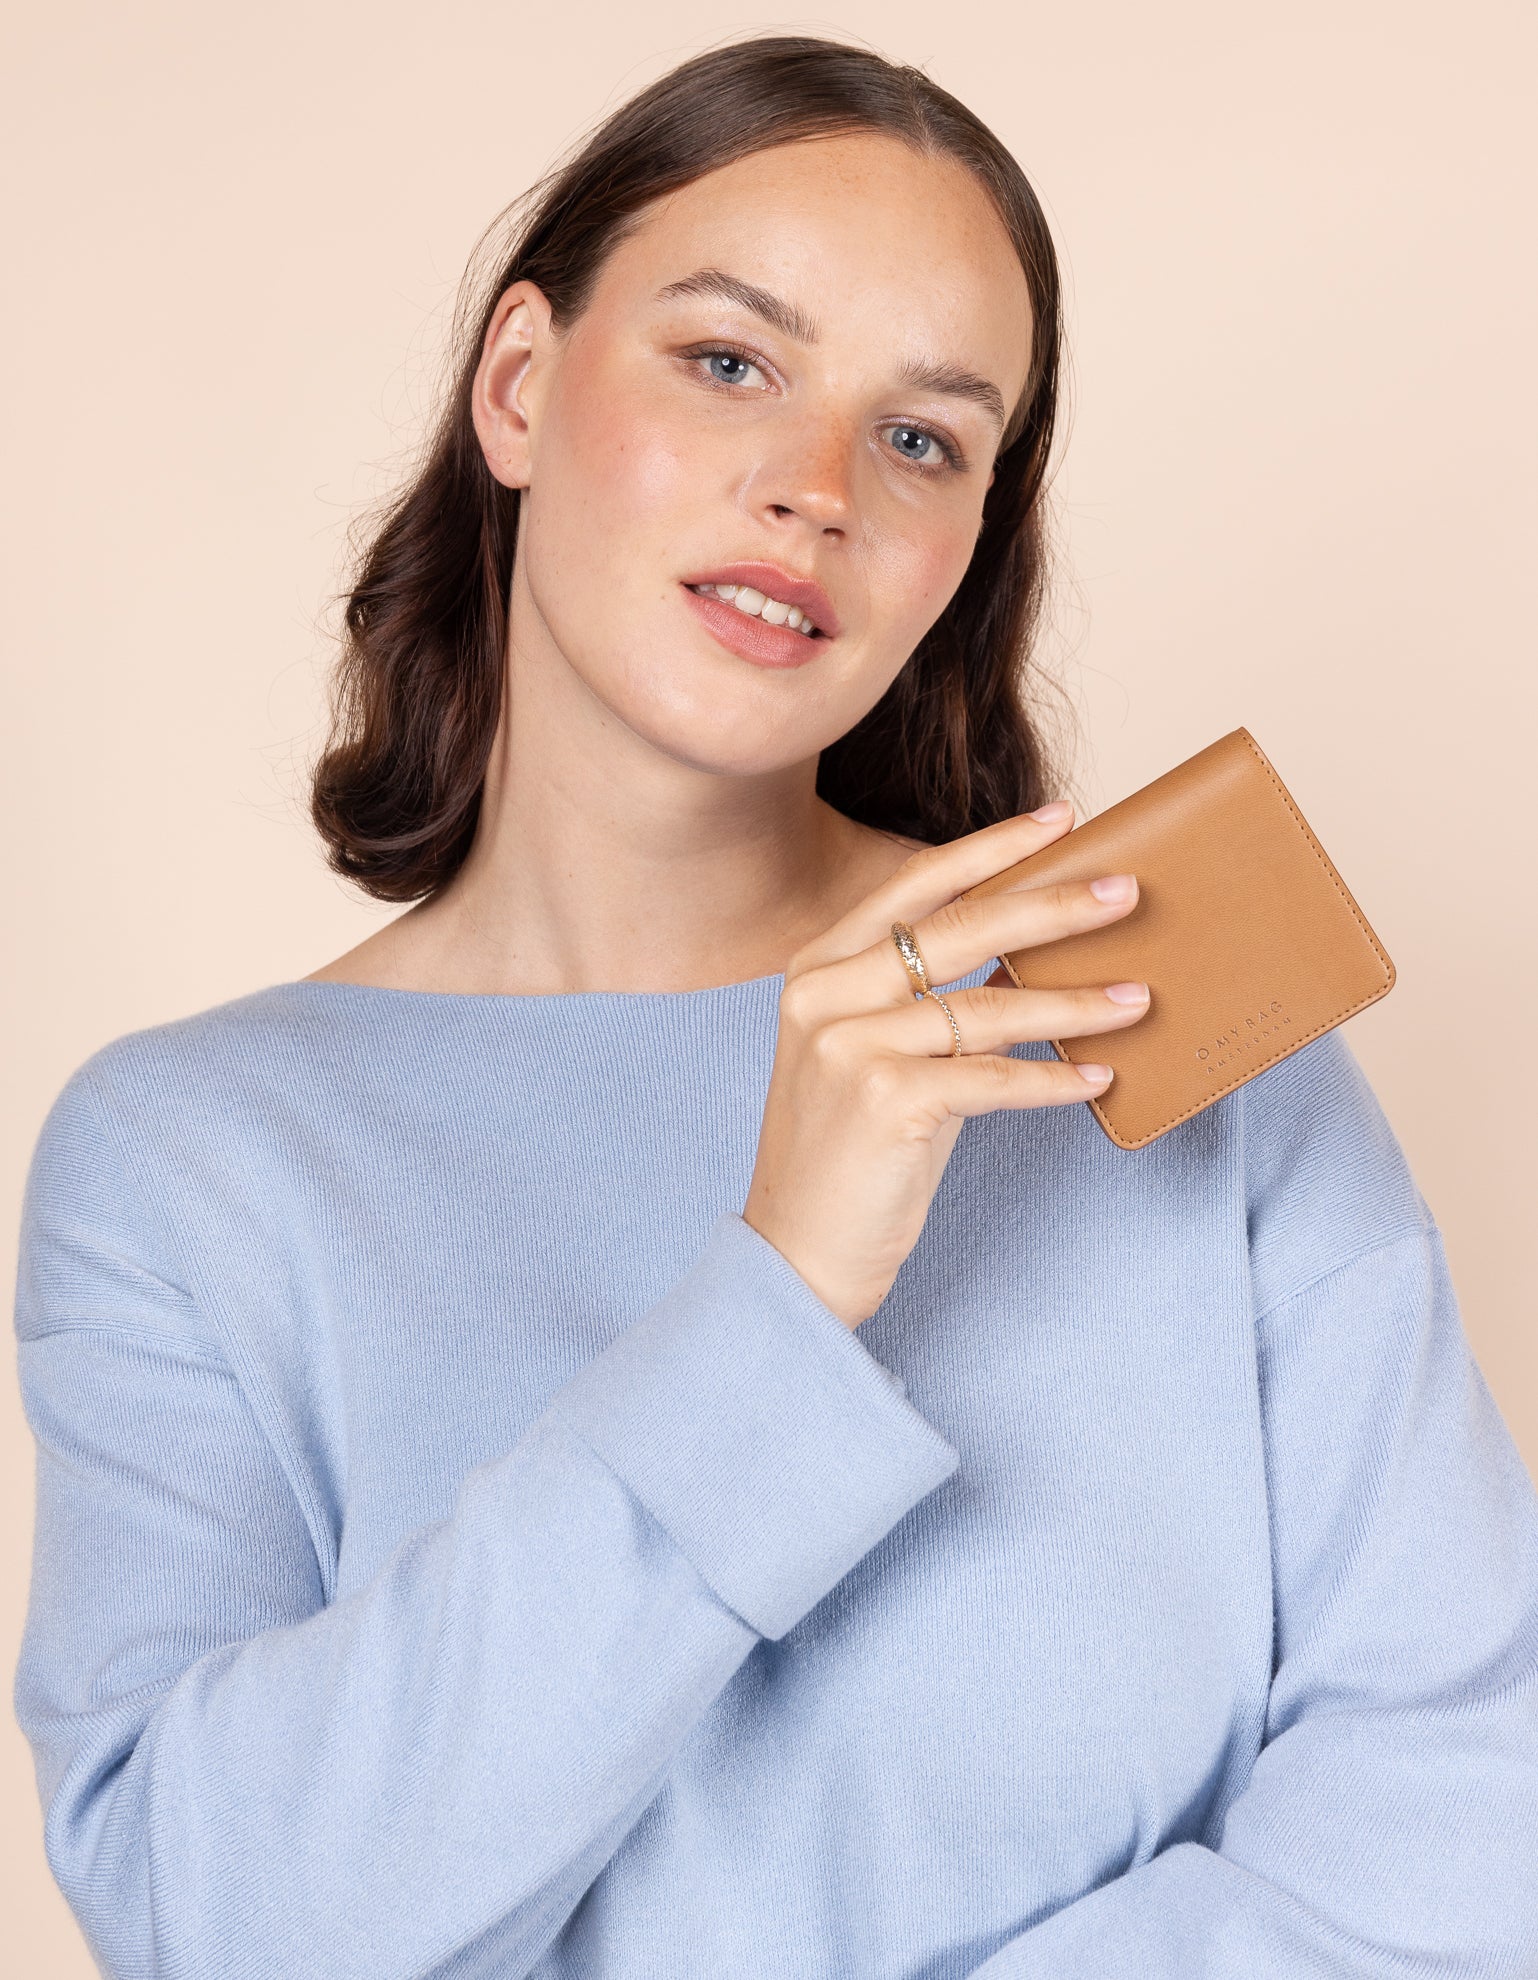 Alex fold over wallet in cognac apple leather - model holding it